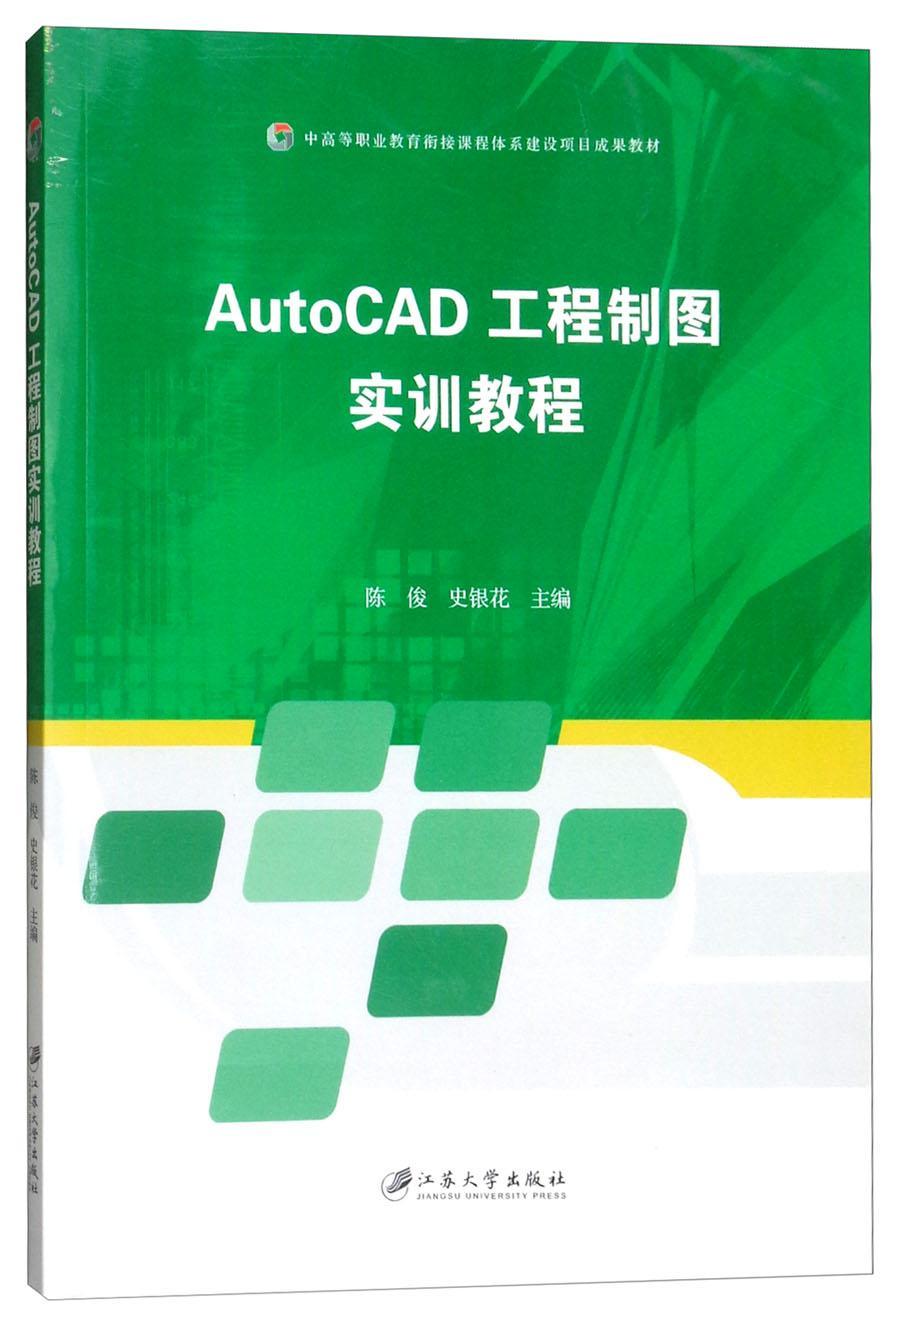 [rt] AutoCAD工程制图实训教程  陈俊  江苏大学出版社  工业技术  工程制图软件职业教育教材